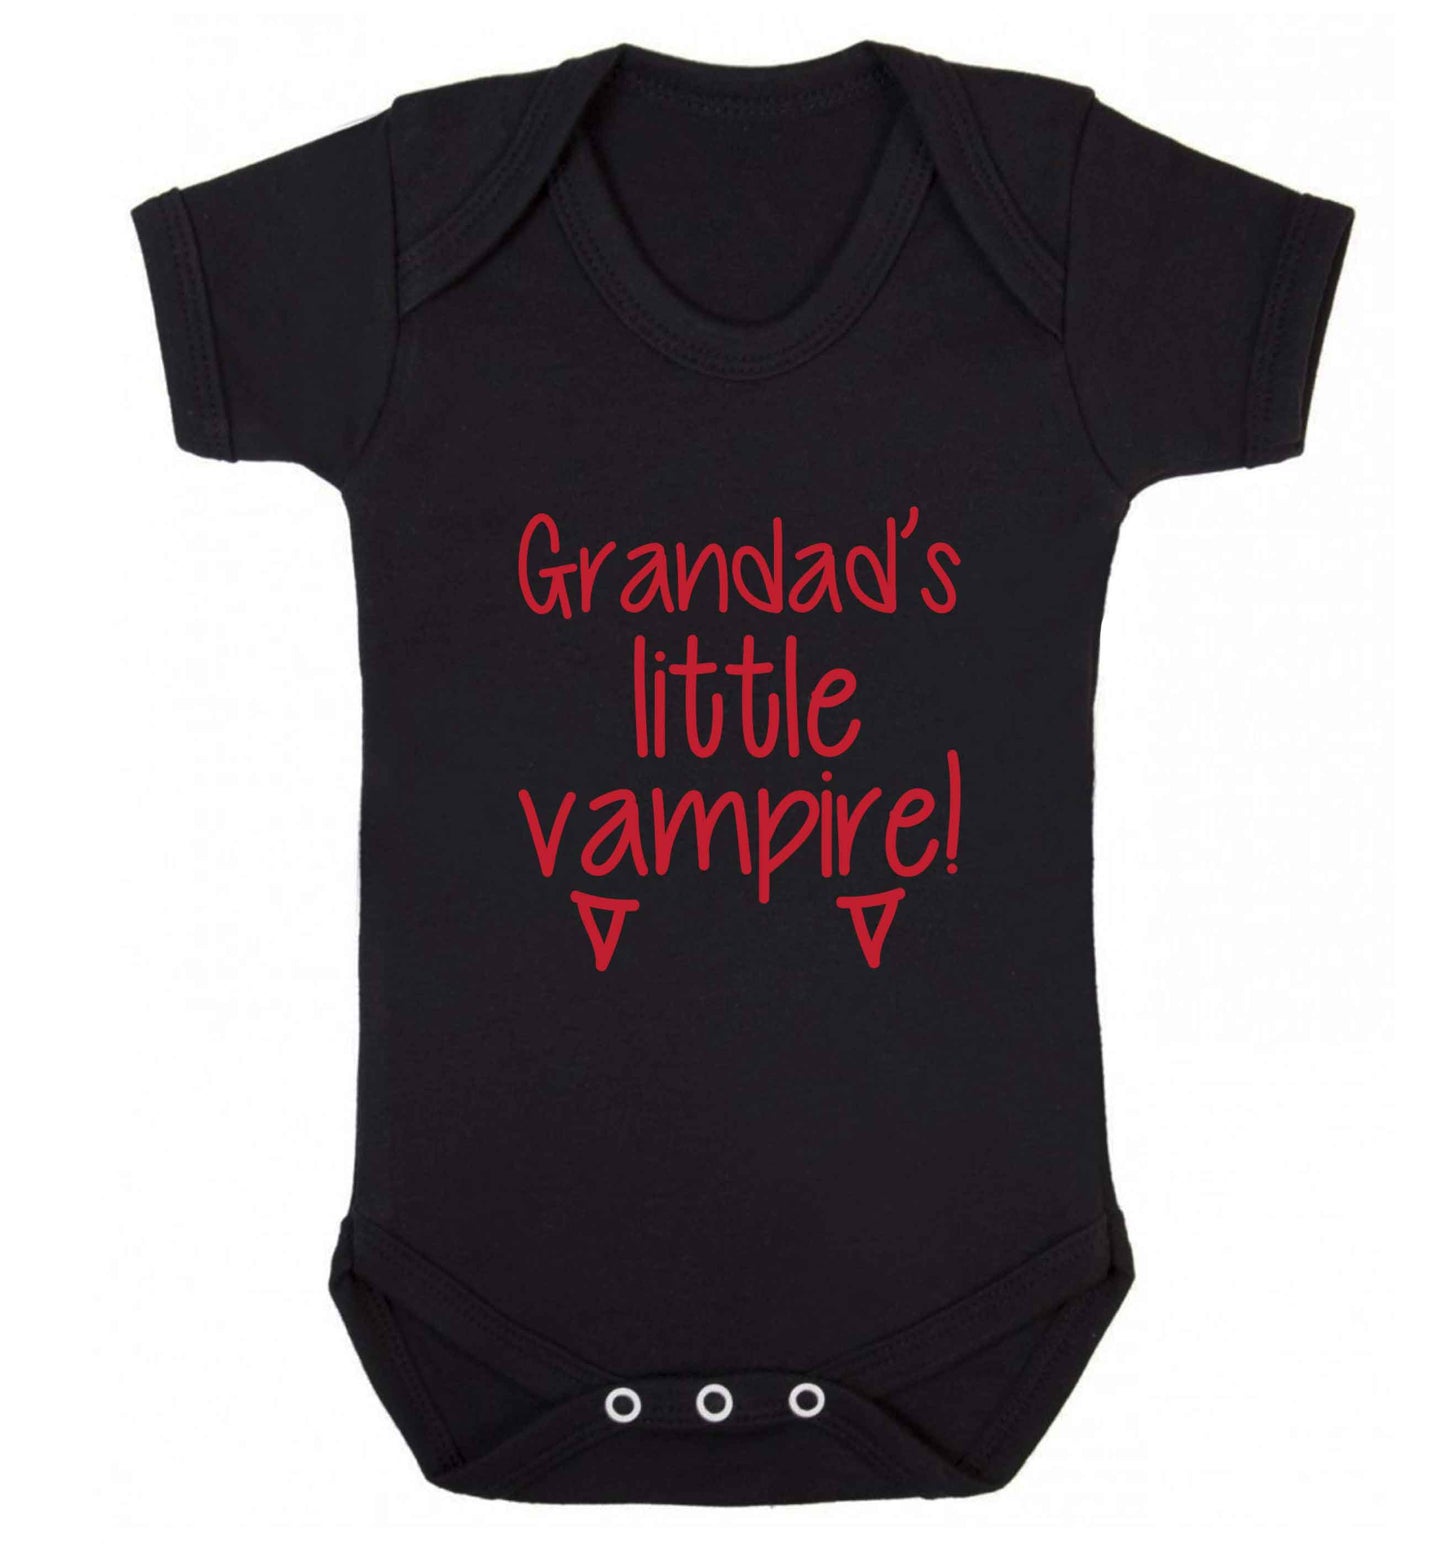 Grandad's little vampire baby vest black 18-24 months